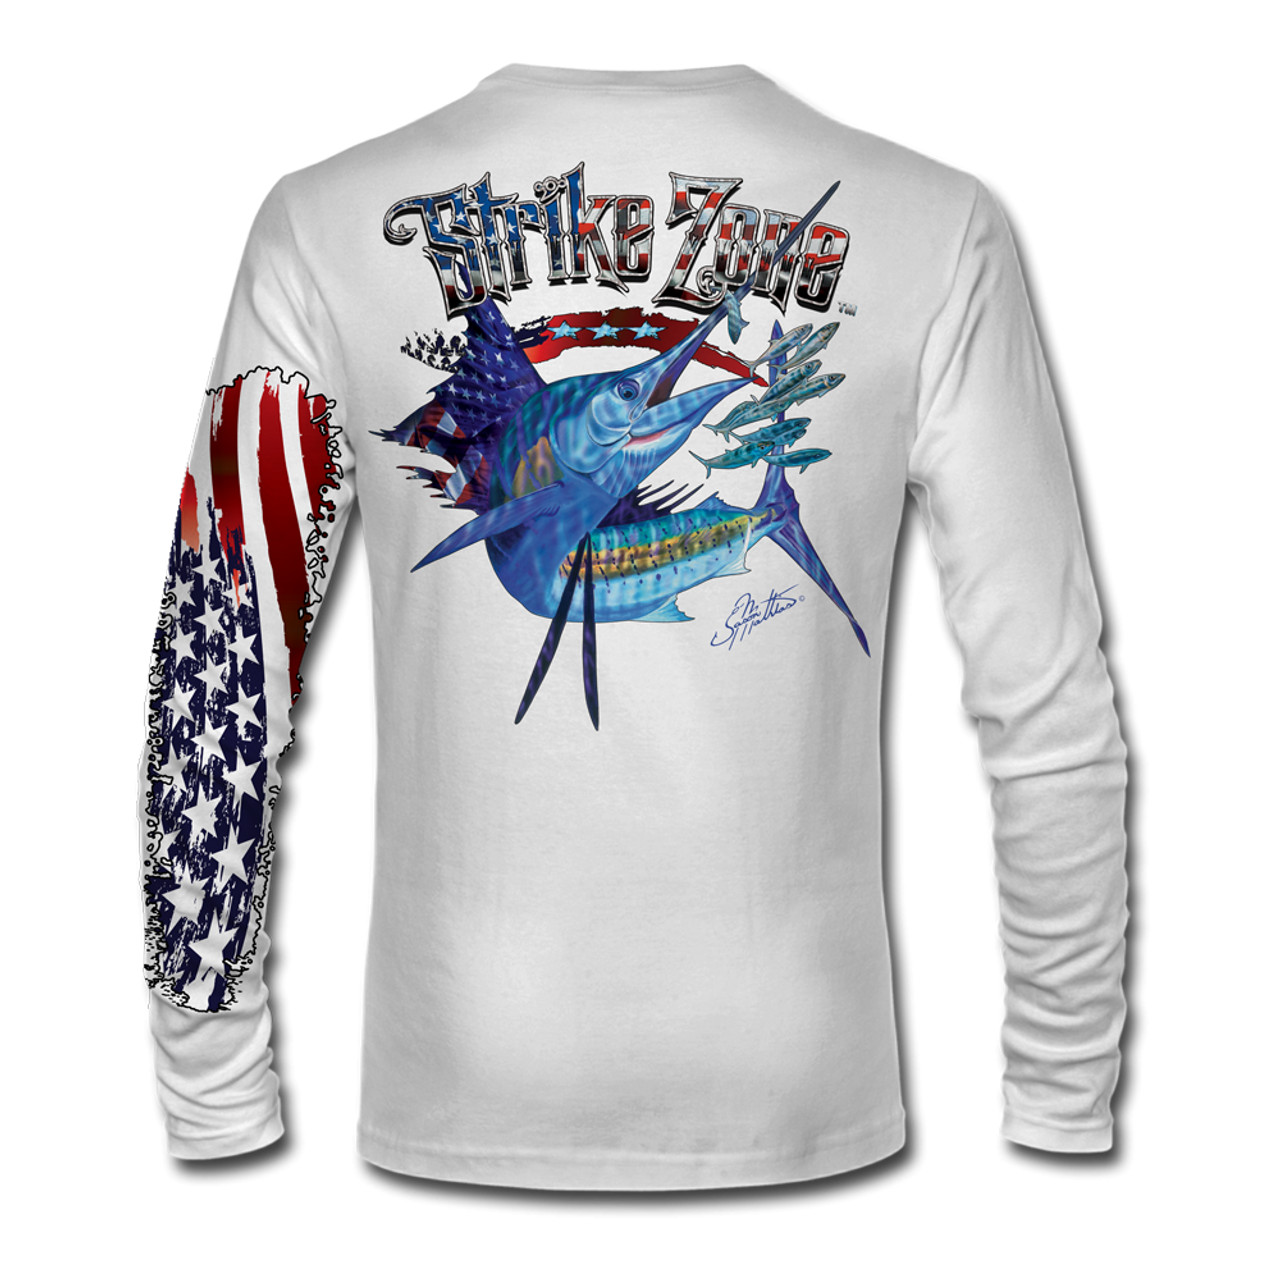 Hawaiian Print Fishing Shirt Fishing American USA Flag Hawaiian Shirt And  Shorts - Freedomdesign